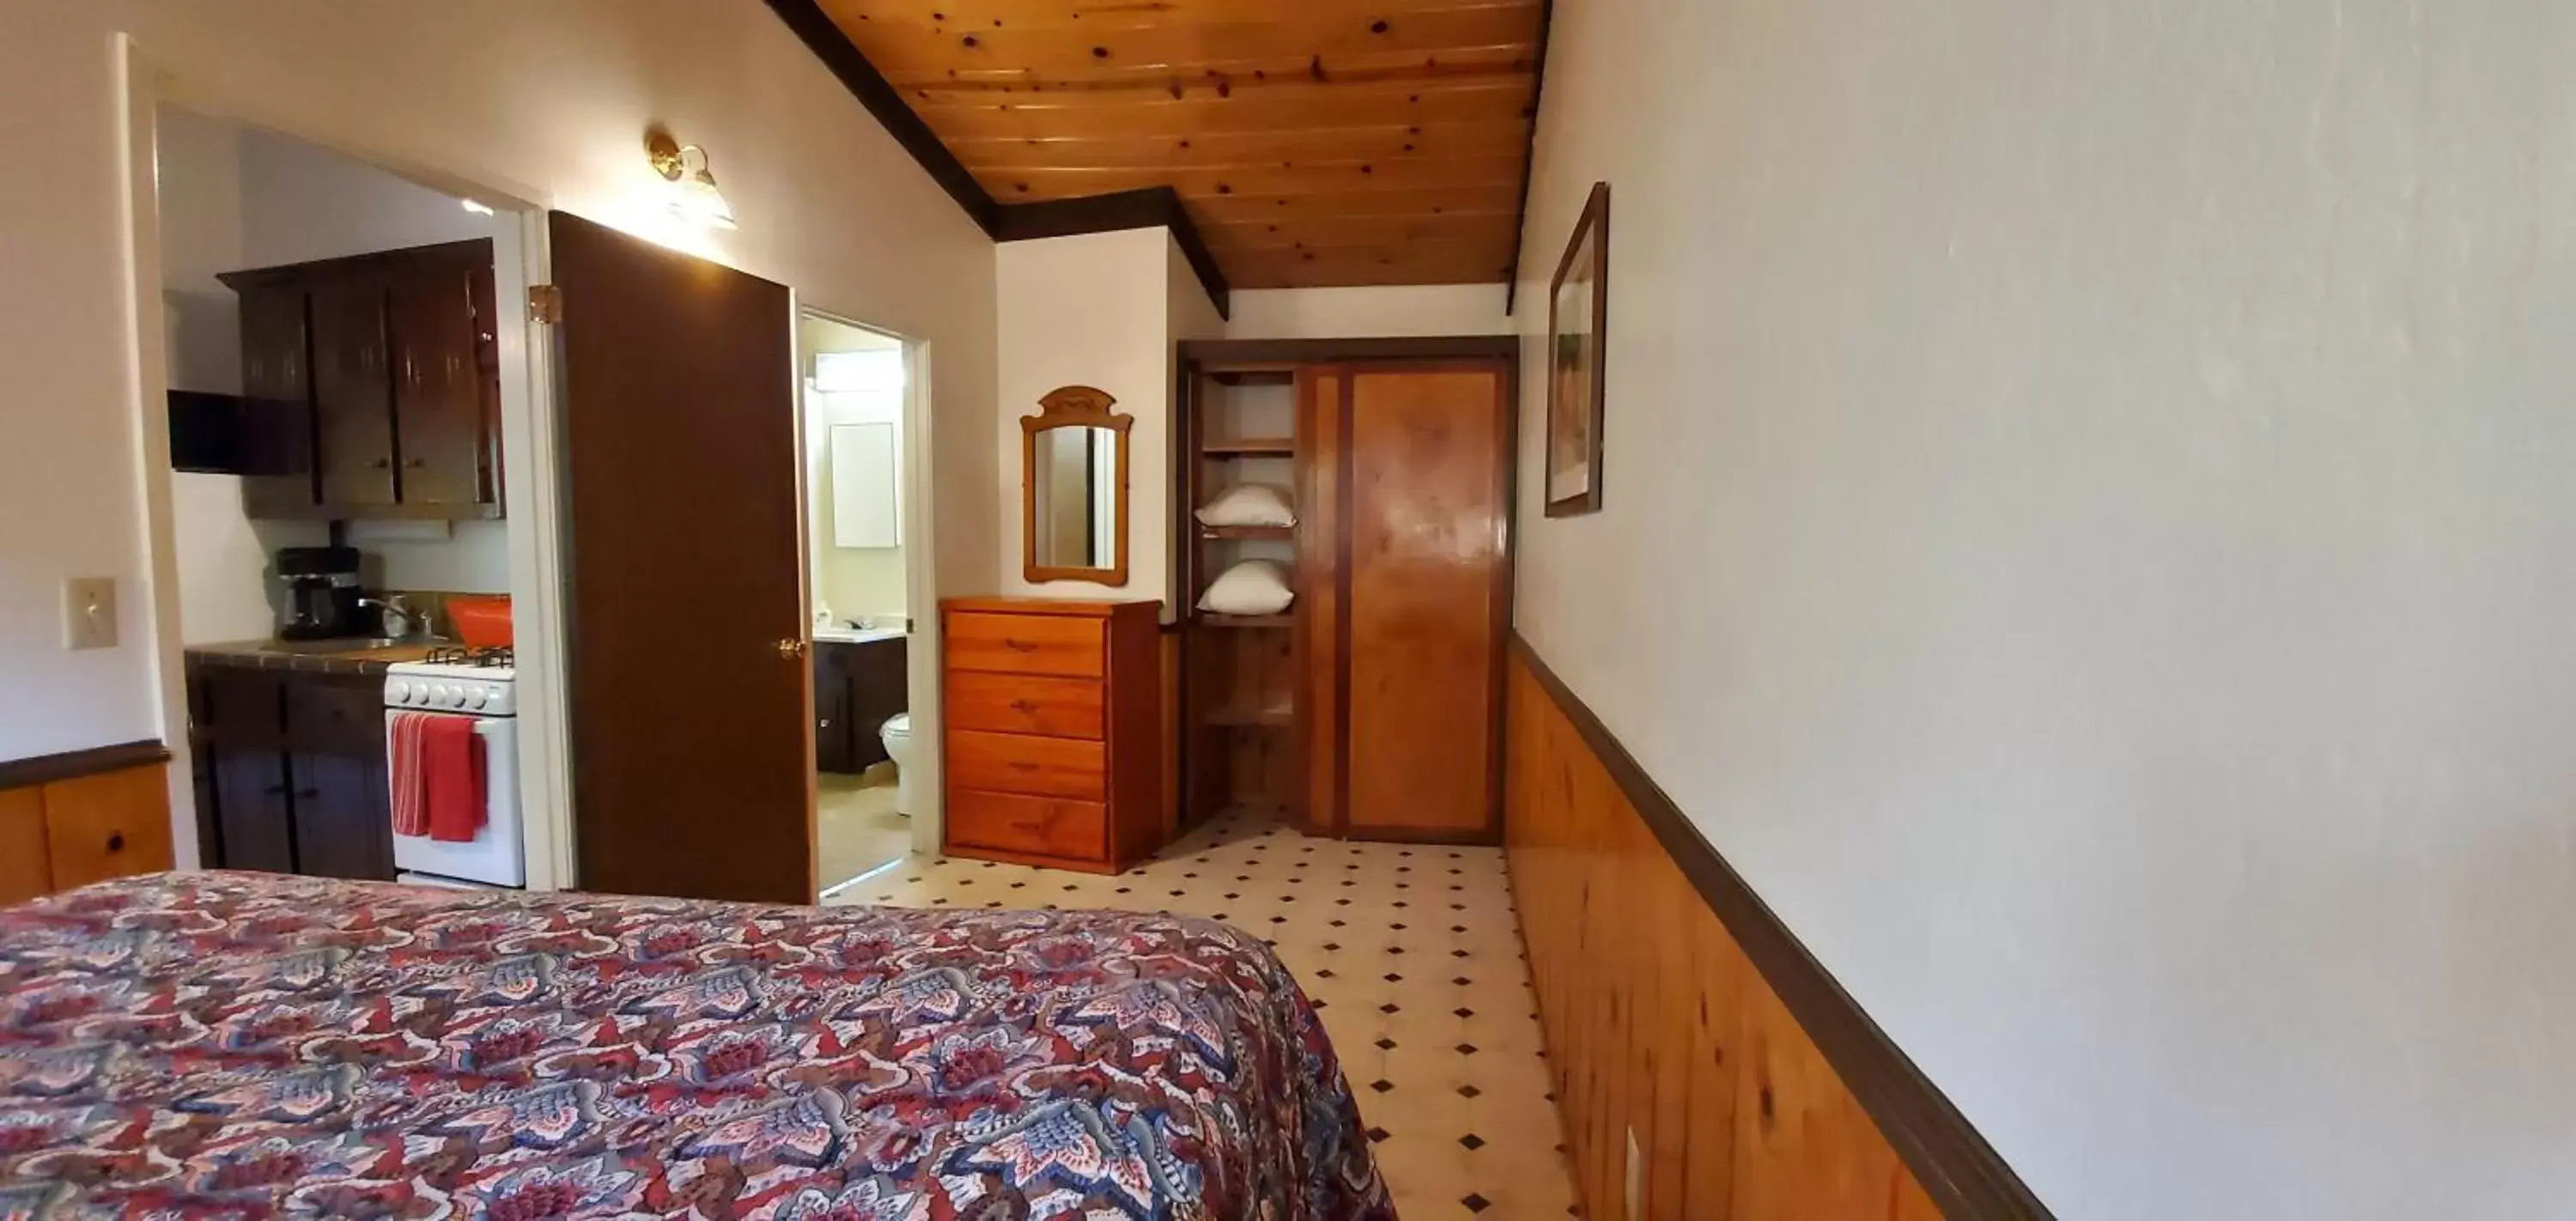 Bedroom, Bed in Fern River Resort